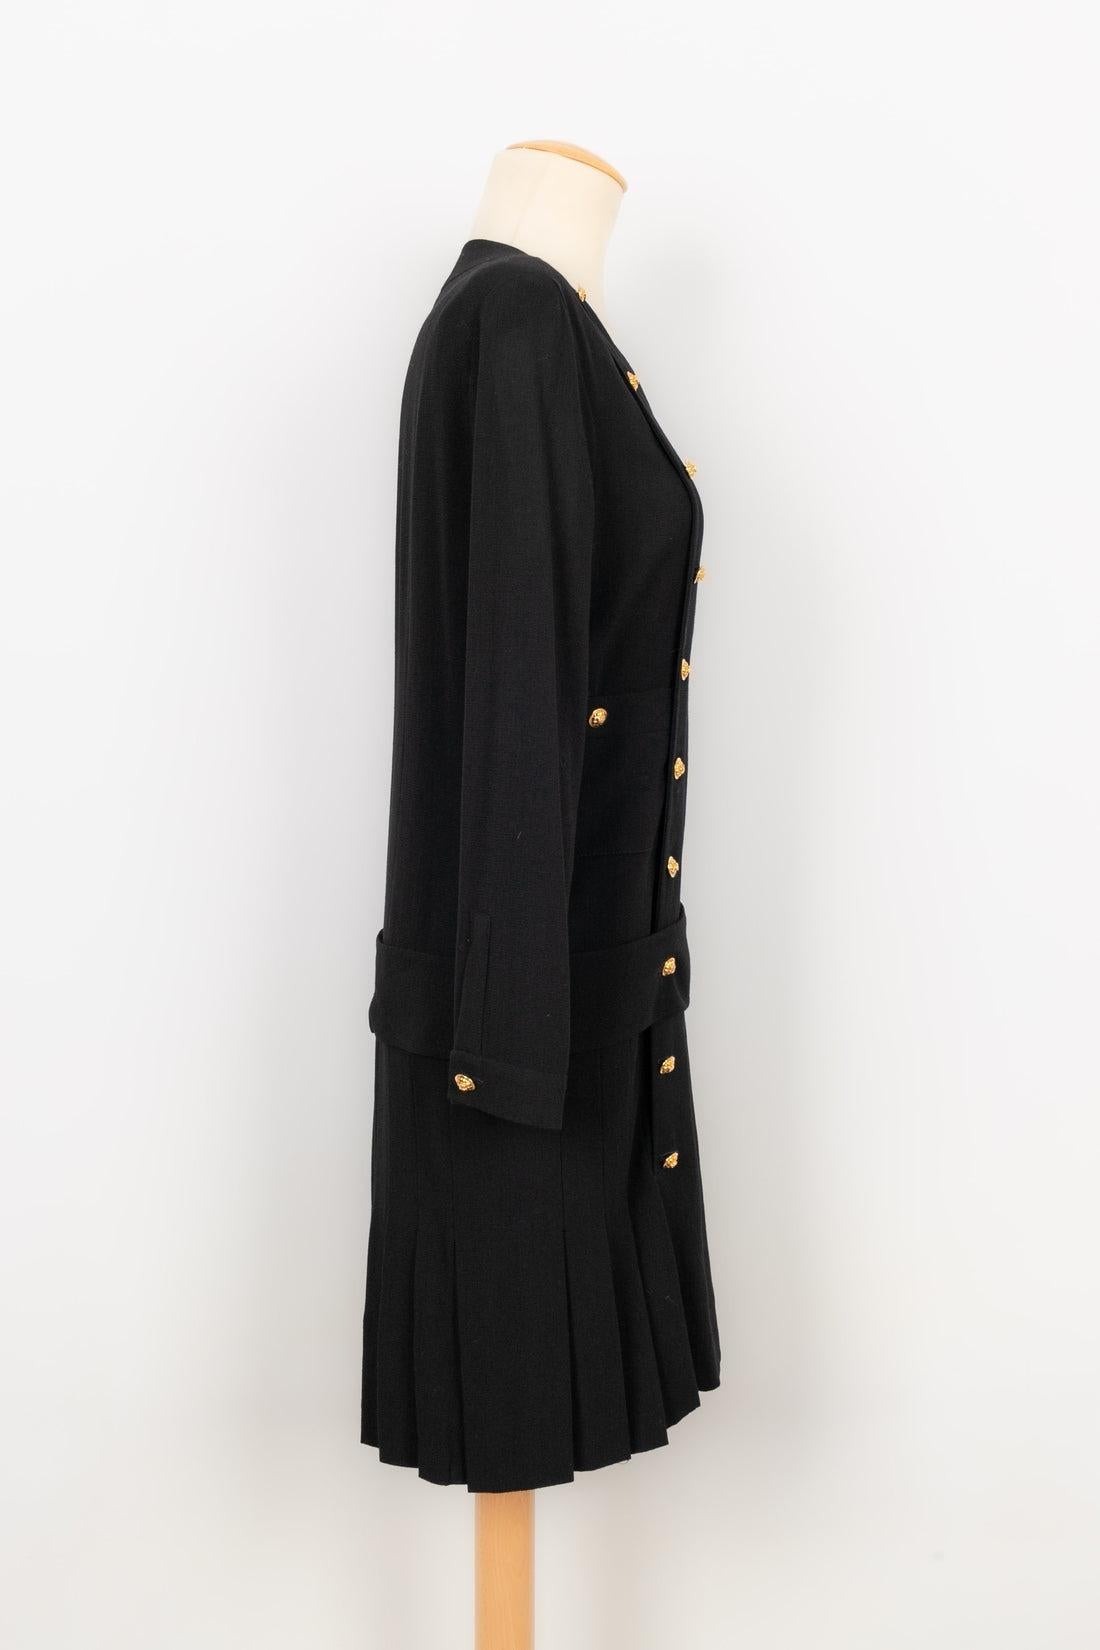 Women's Chanel Long-Sleeved Black Dress, 1980S For Sale